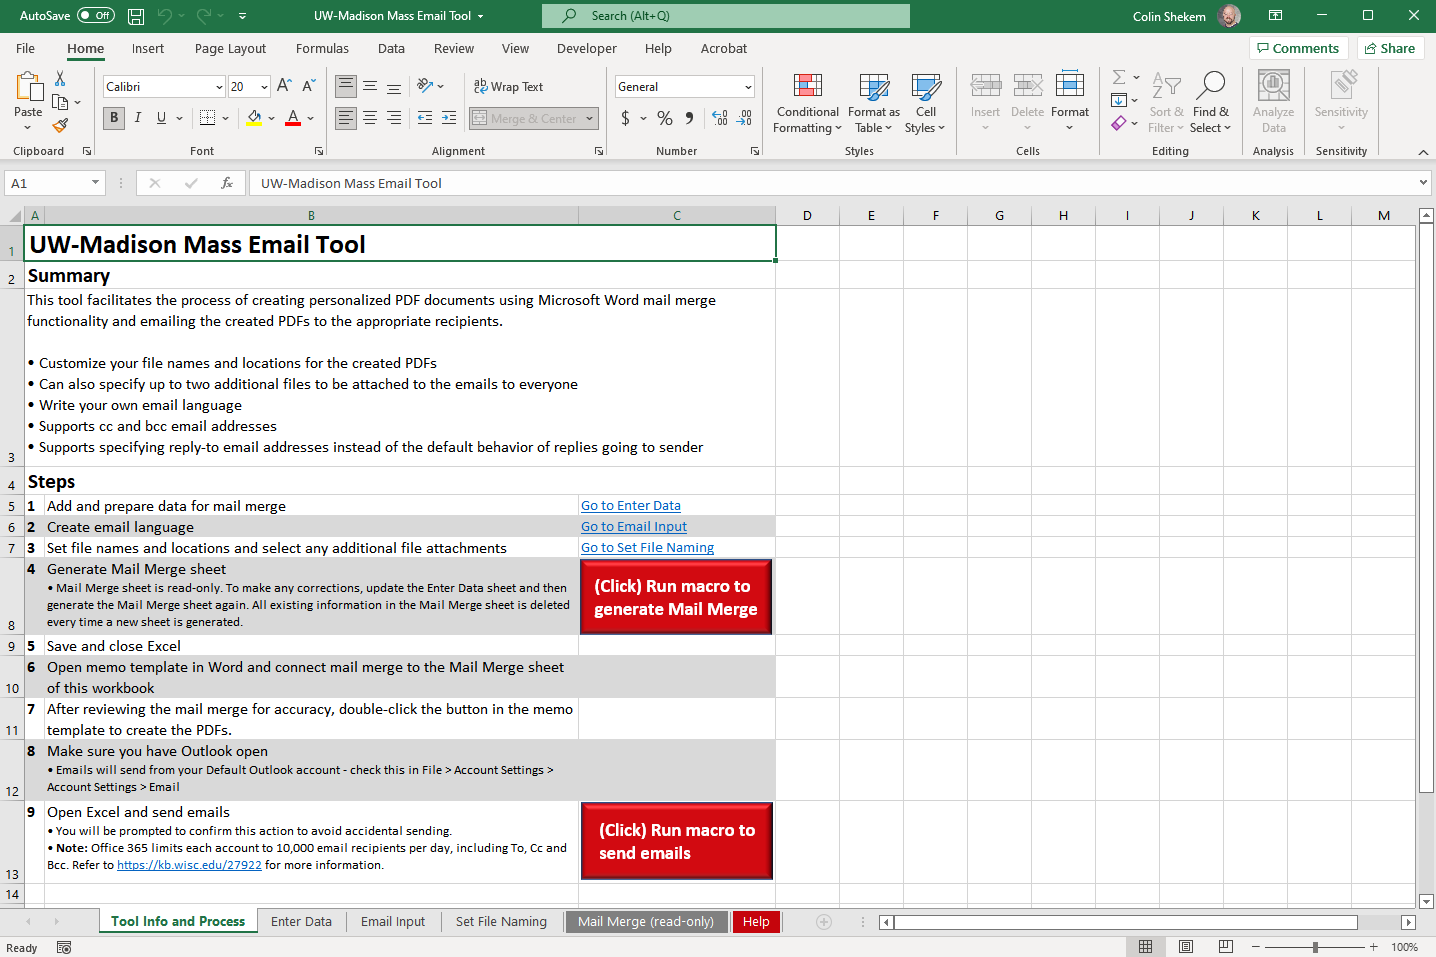 Screenshot of Mass Email Tool Excel workbook